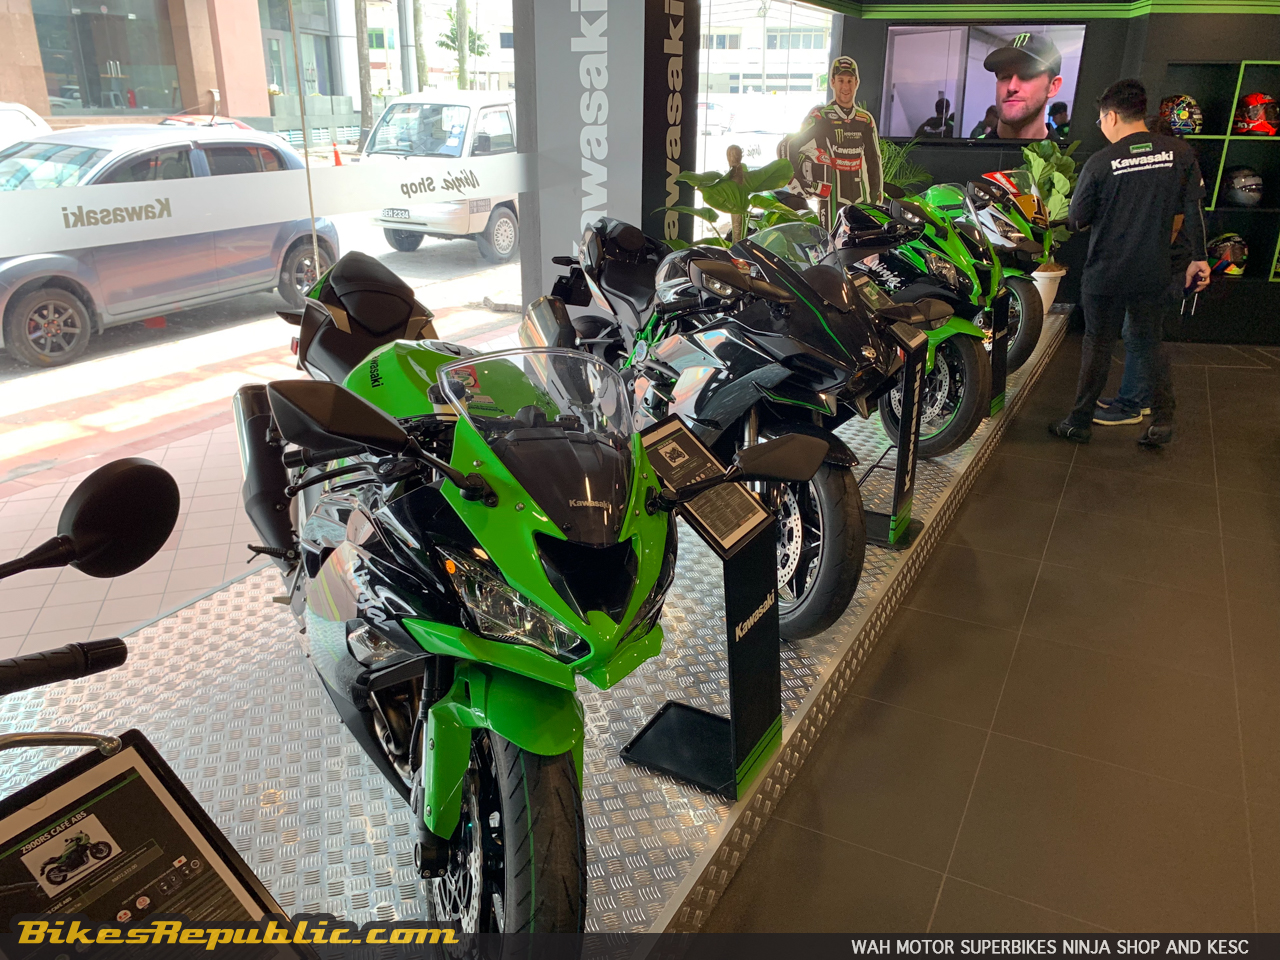 Wah Superbikes Ninja Shop-12 - Motorcycle news, from Malaysia, Asia and the world BikesRepublic.com